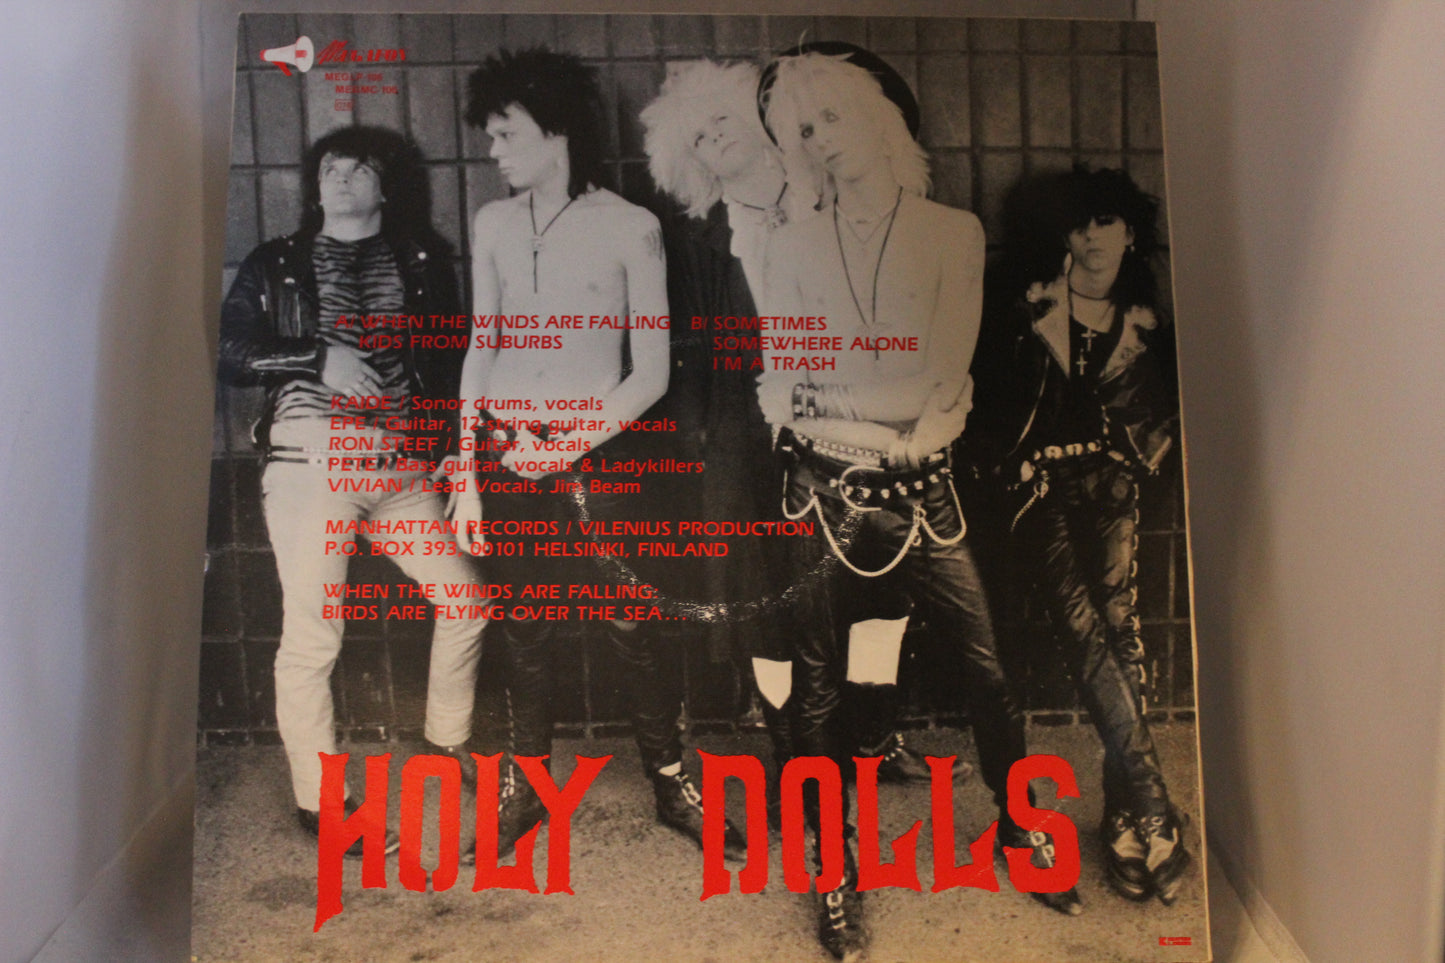 Holy Dolls 12 mini album